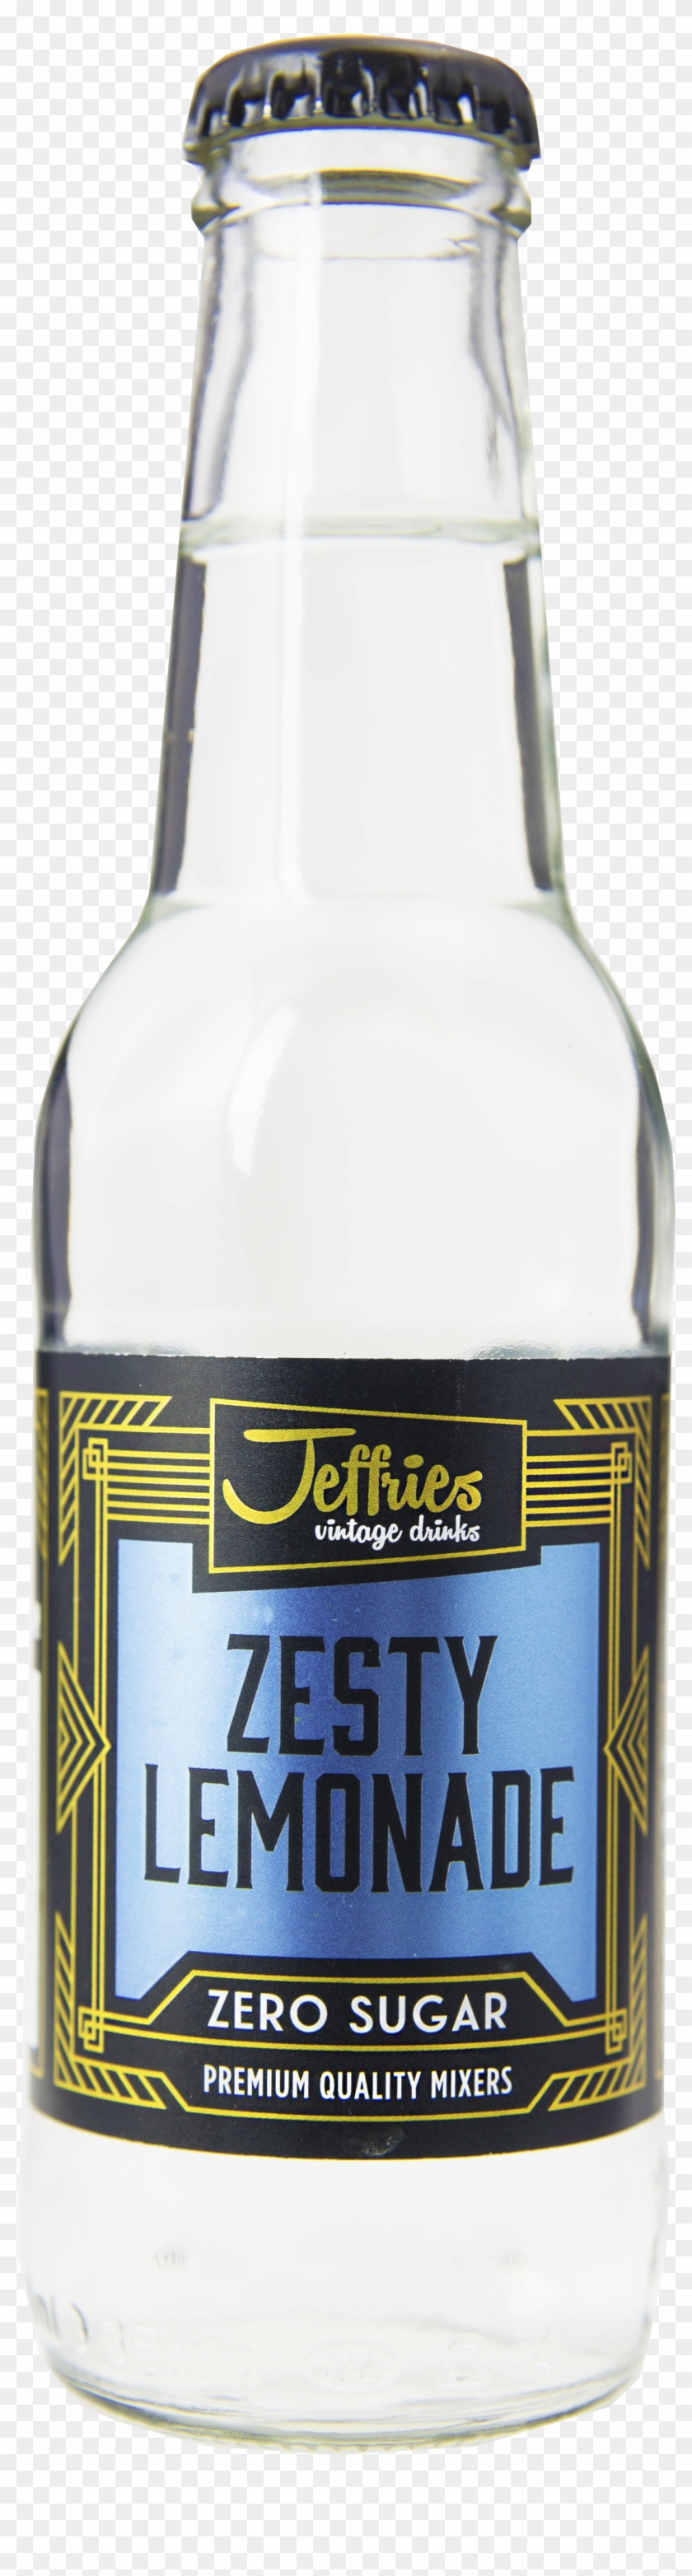 Vintage Drinks - Jeffries - Water Bottle Clipart #9351